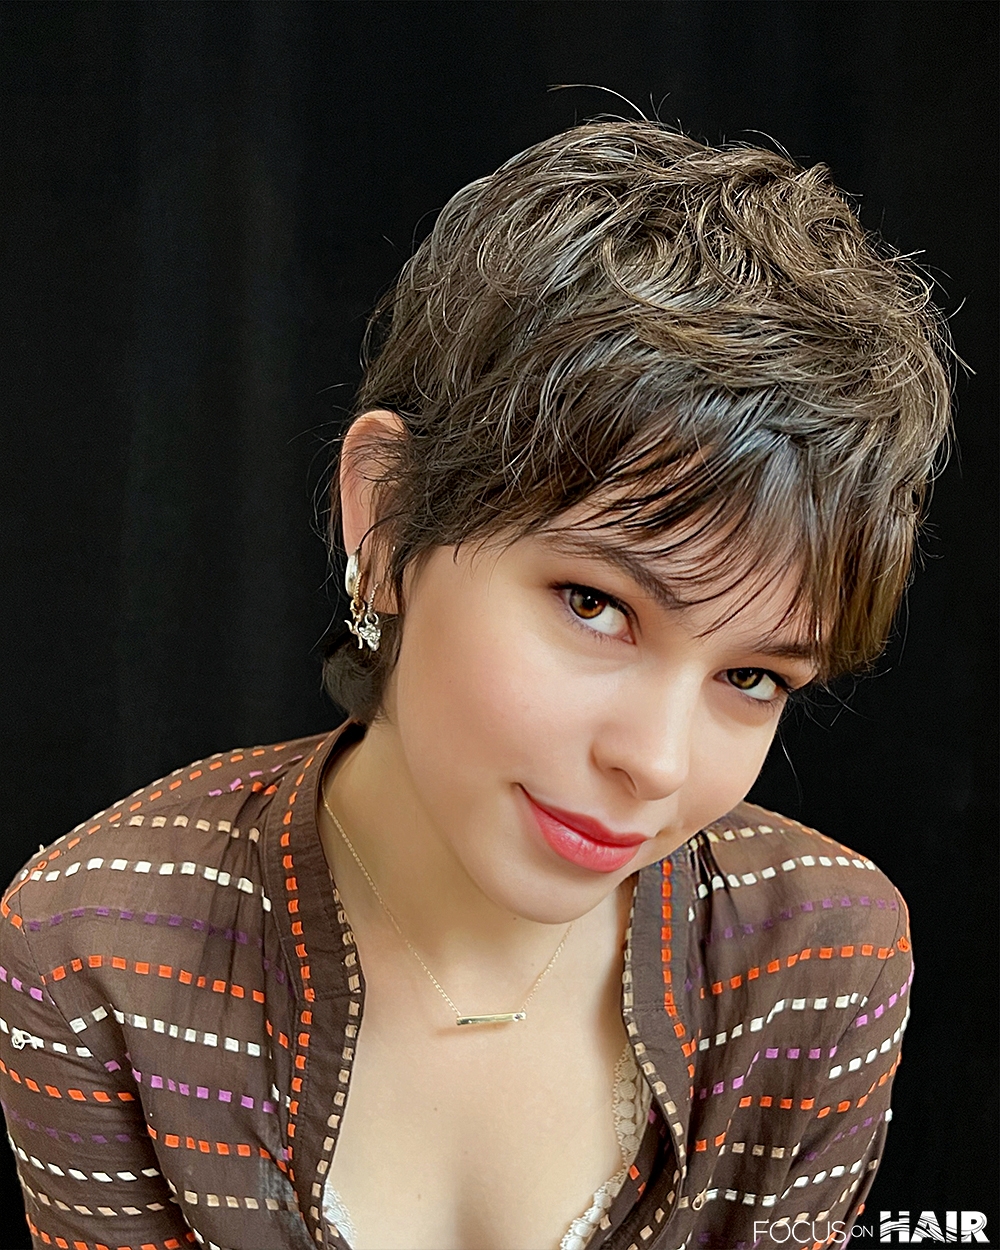  Teresa Romero Hairstylist